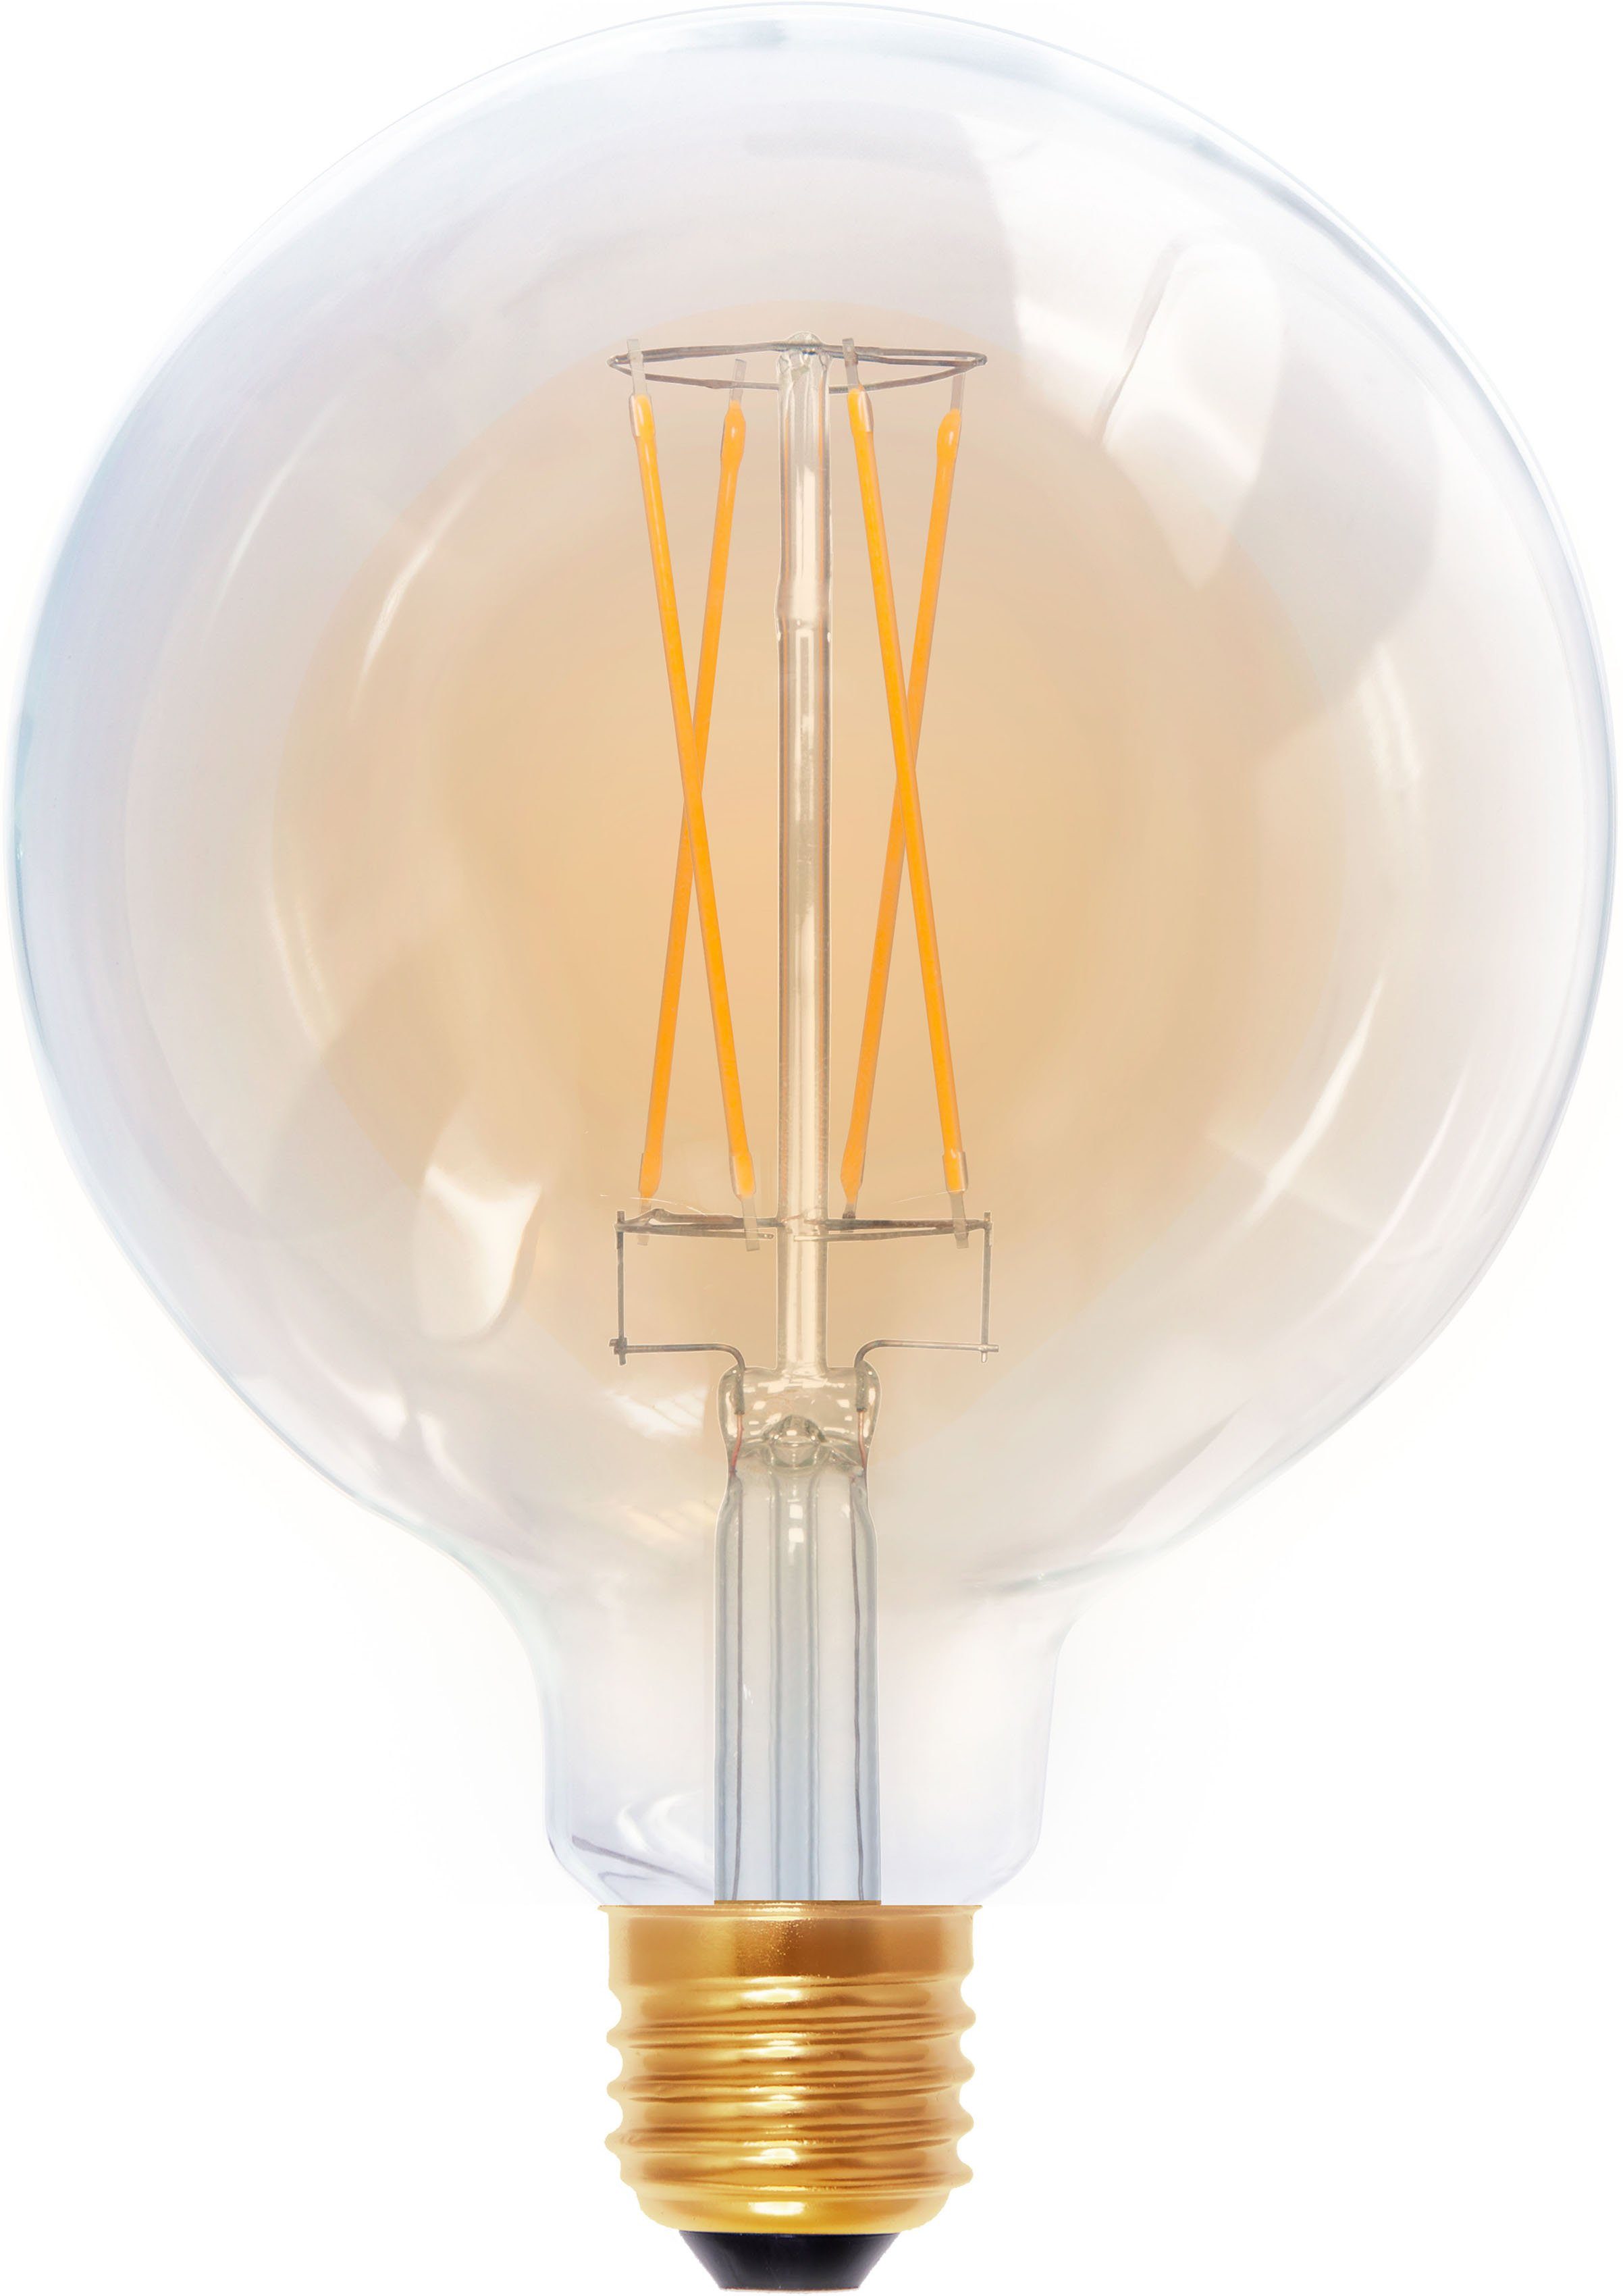 SEGULA LED-Leuchtmittel LED Globe 125 gold, E27, Warmweiß, dimmbar, E27, Globe 125, gold